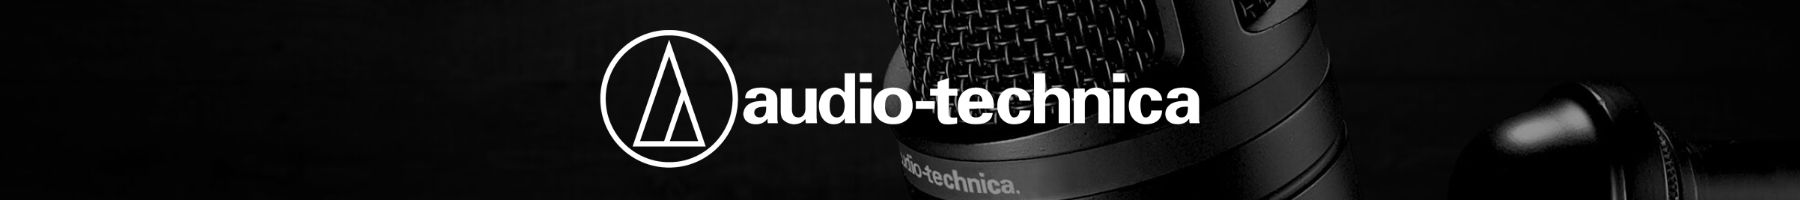 Audio-Technica Imatge marca.jpg